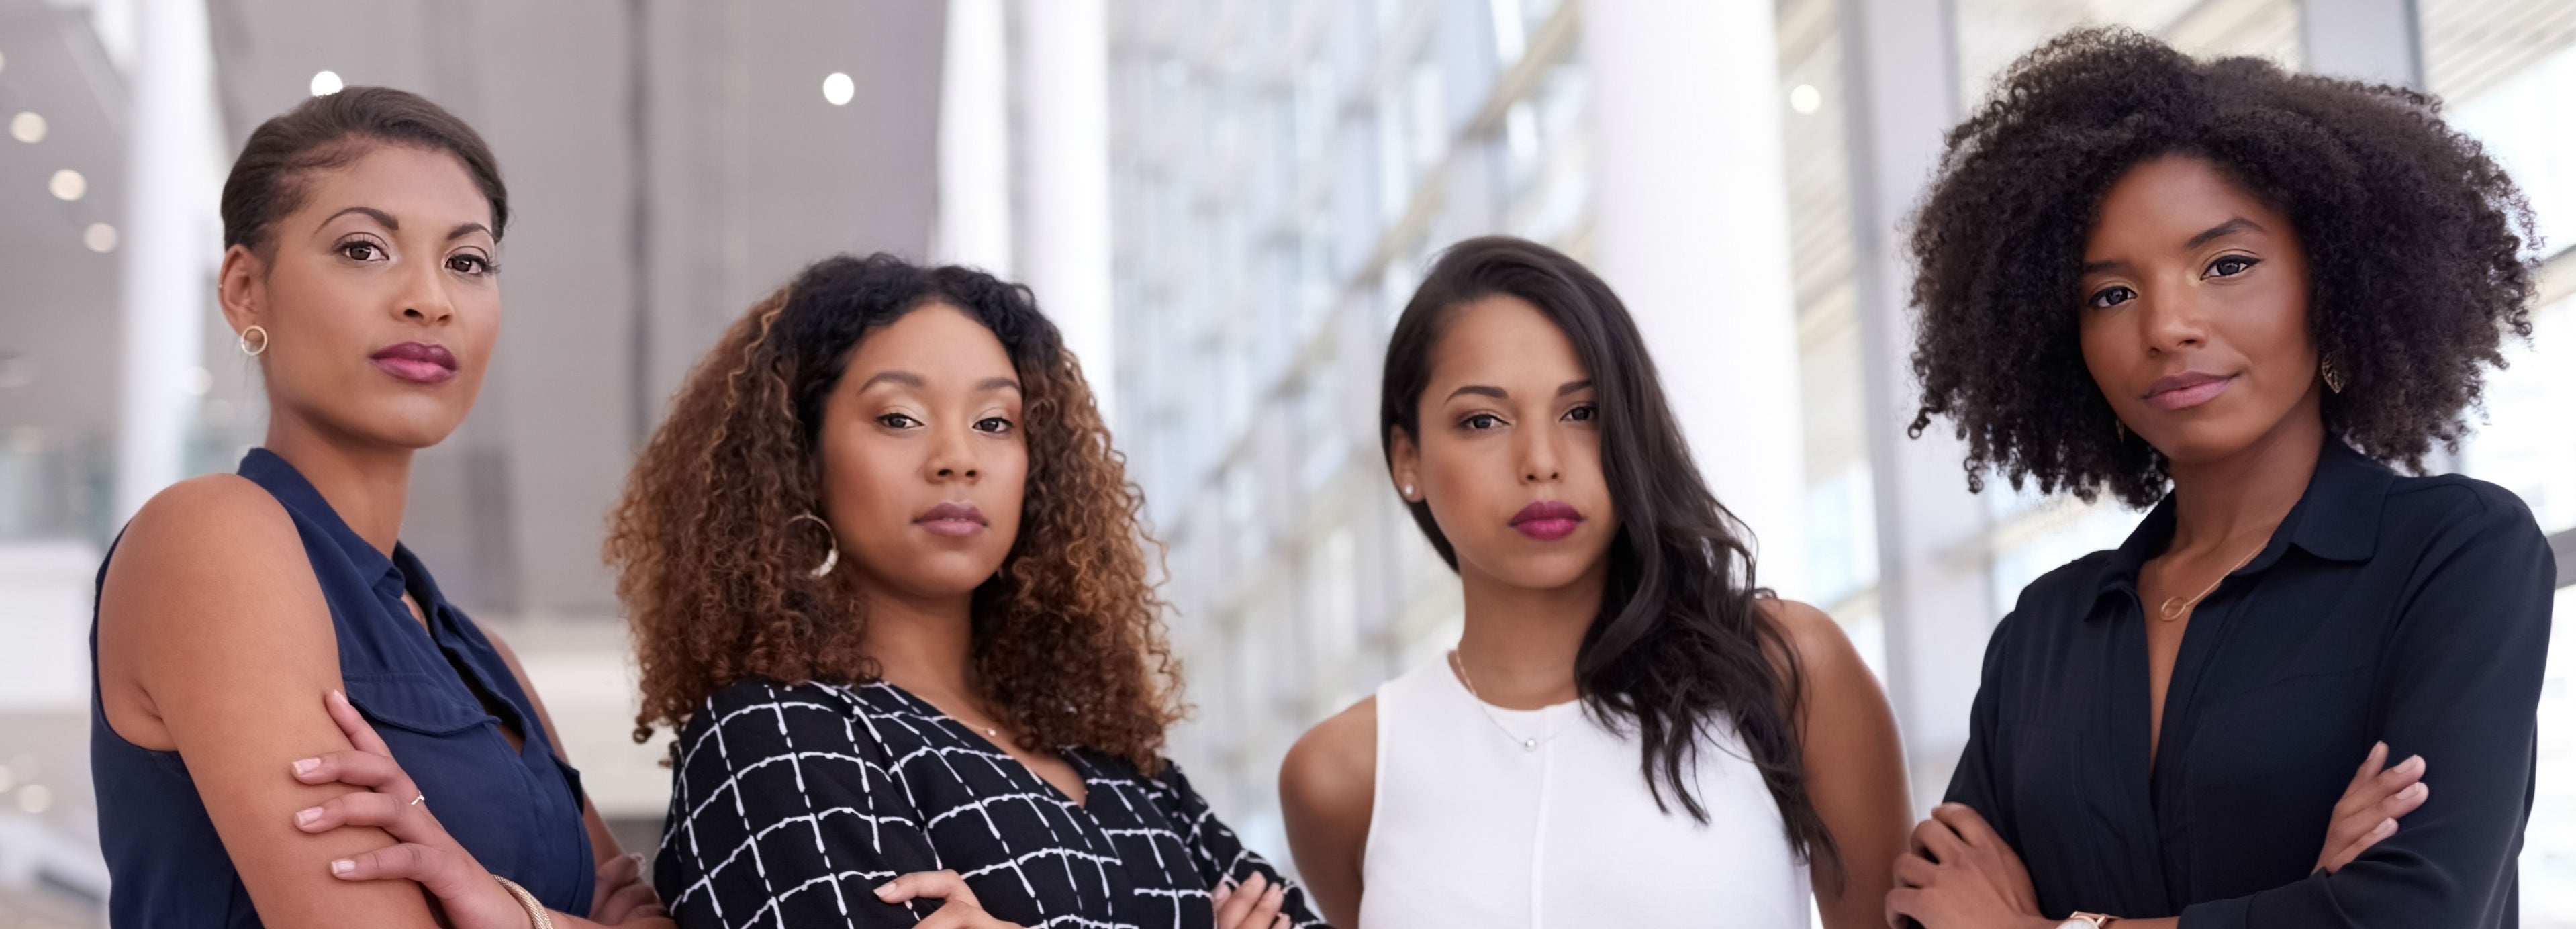 What Do Black Women Want This Election Season?